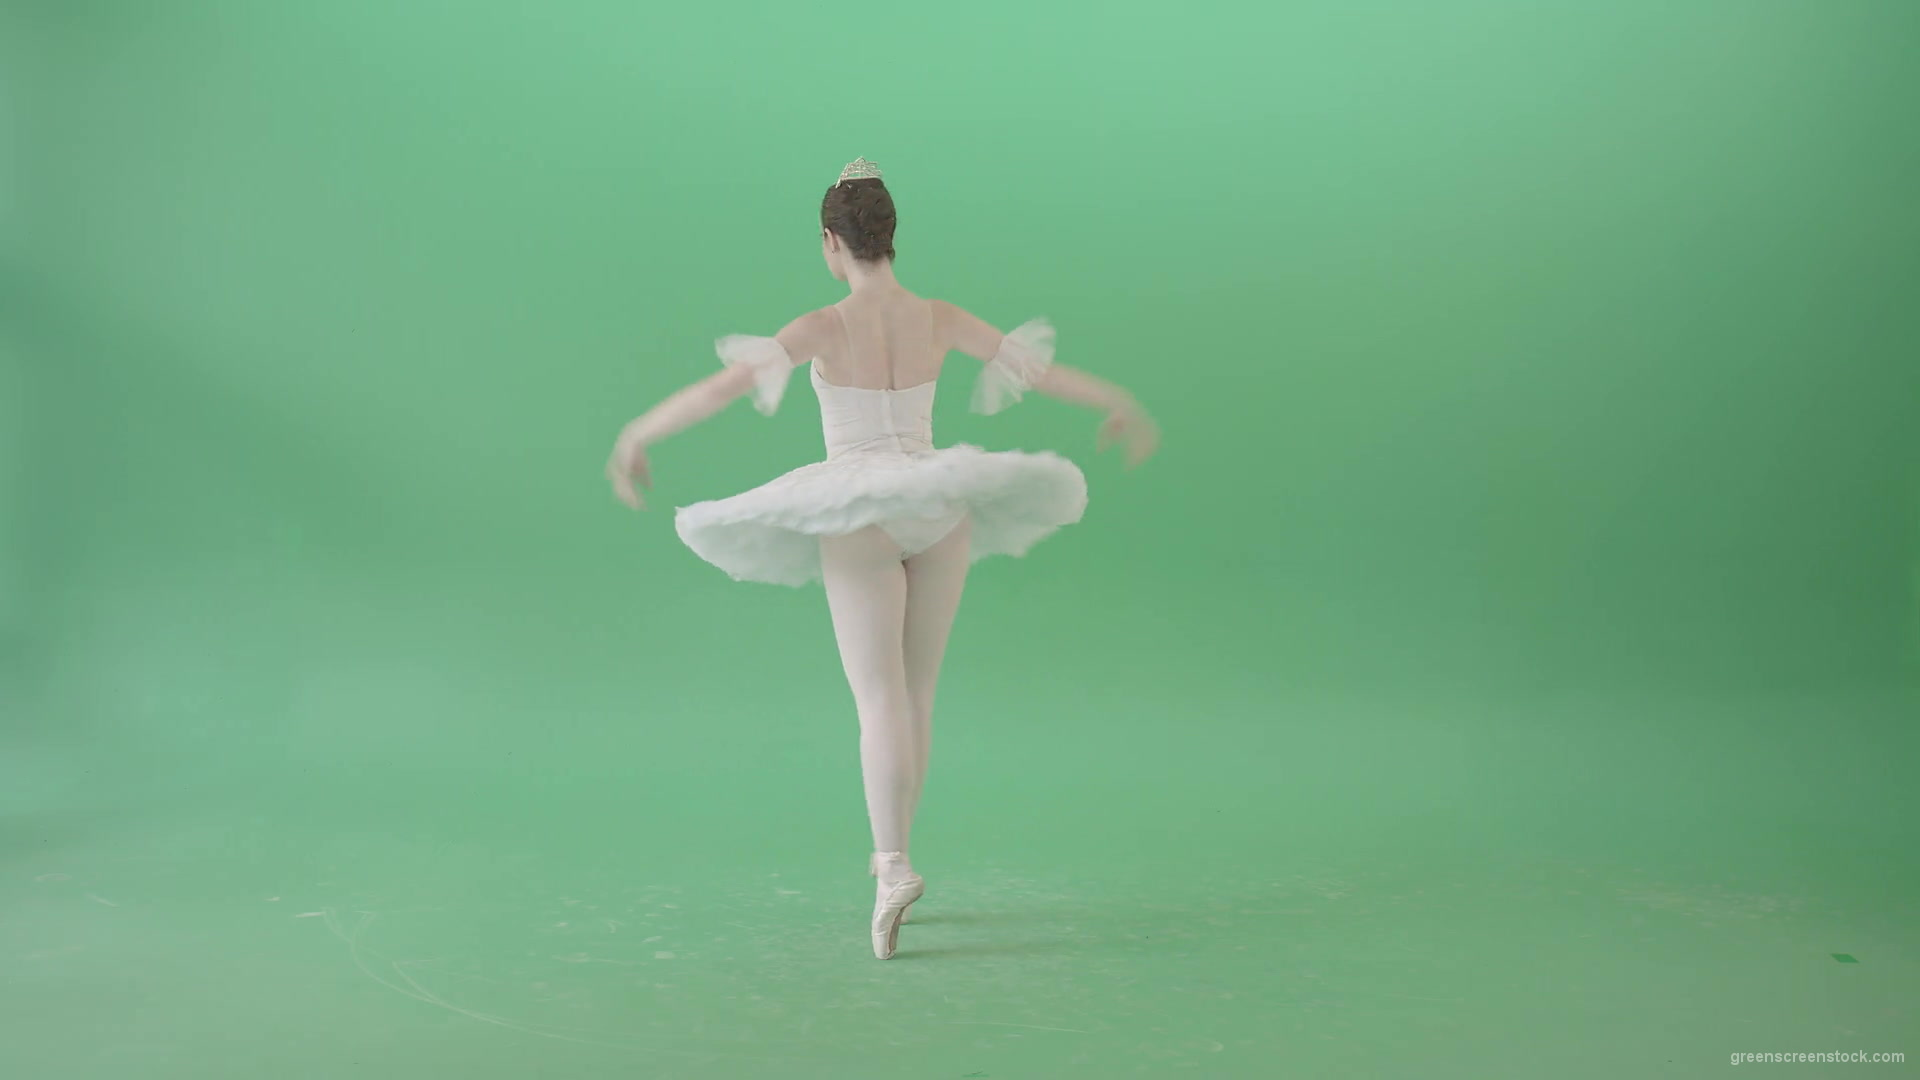 vj video background Girl-in-ballet-white-dress-performs-in-green-screen-studio-spinning-elegant-4K-Video-Footage-1920_003